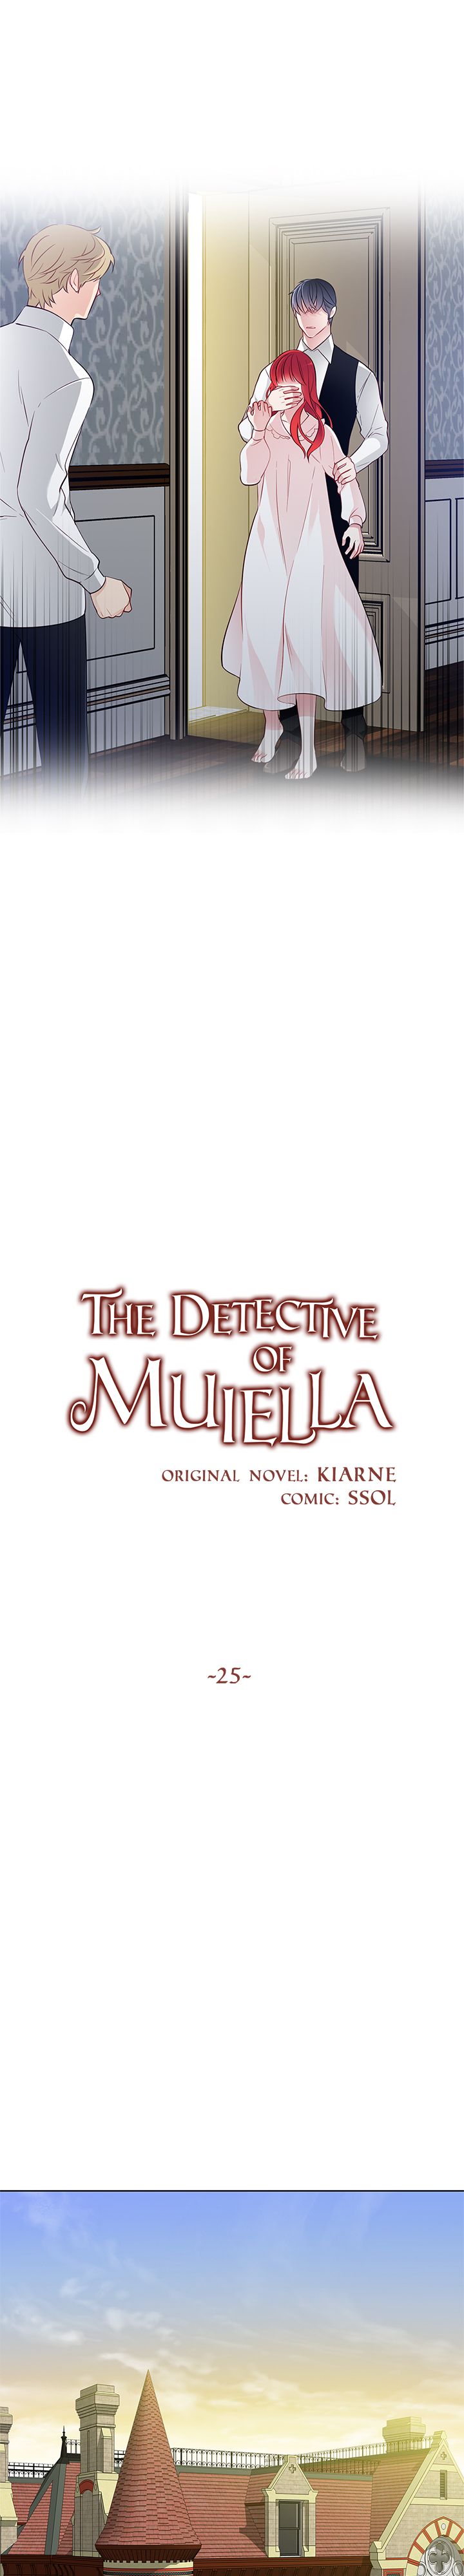 The Detective of Muiella Ch.25